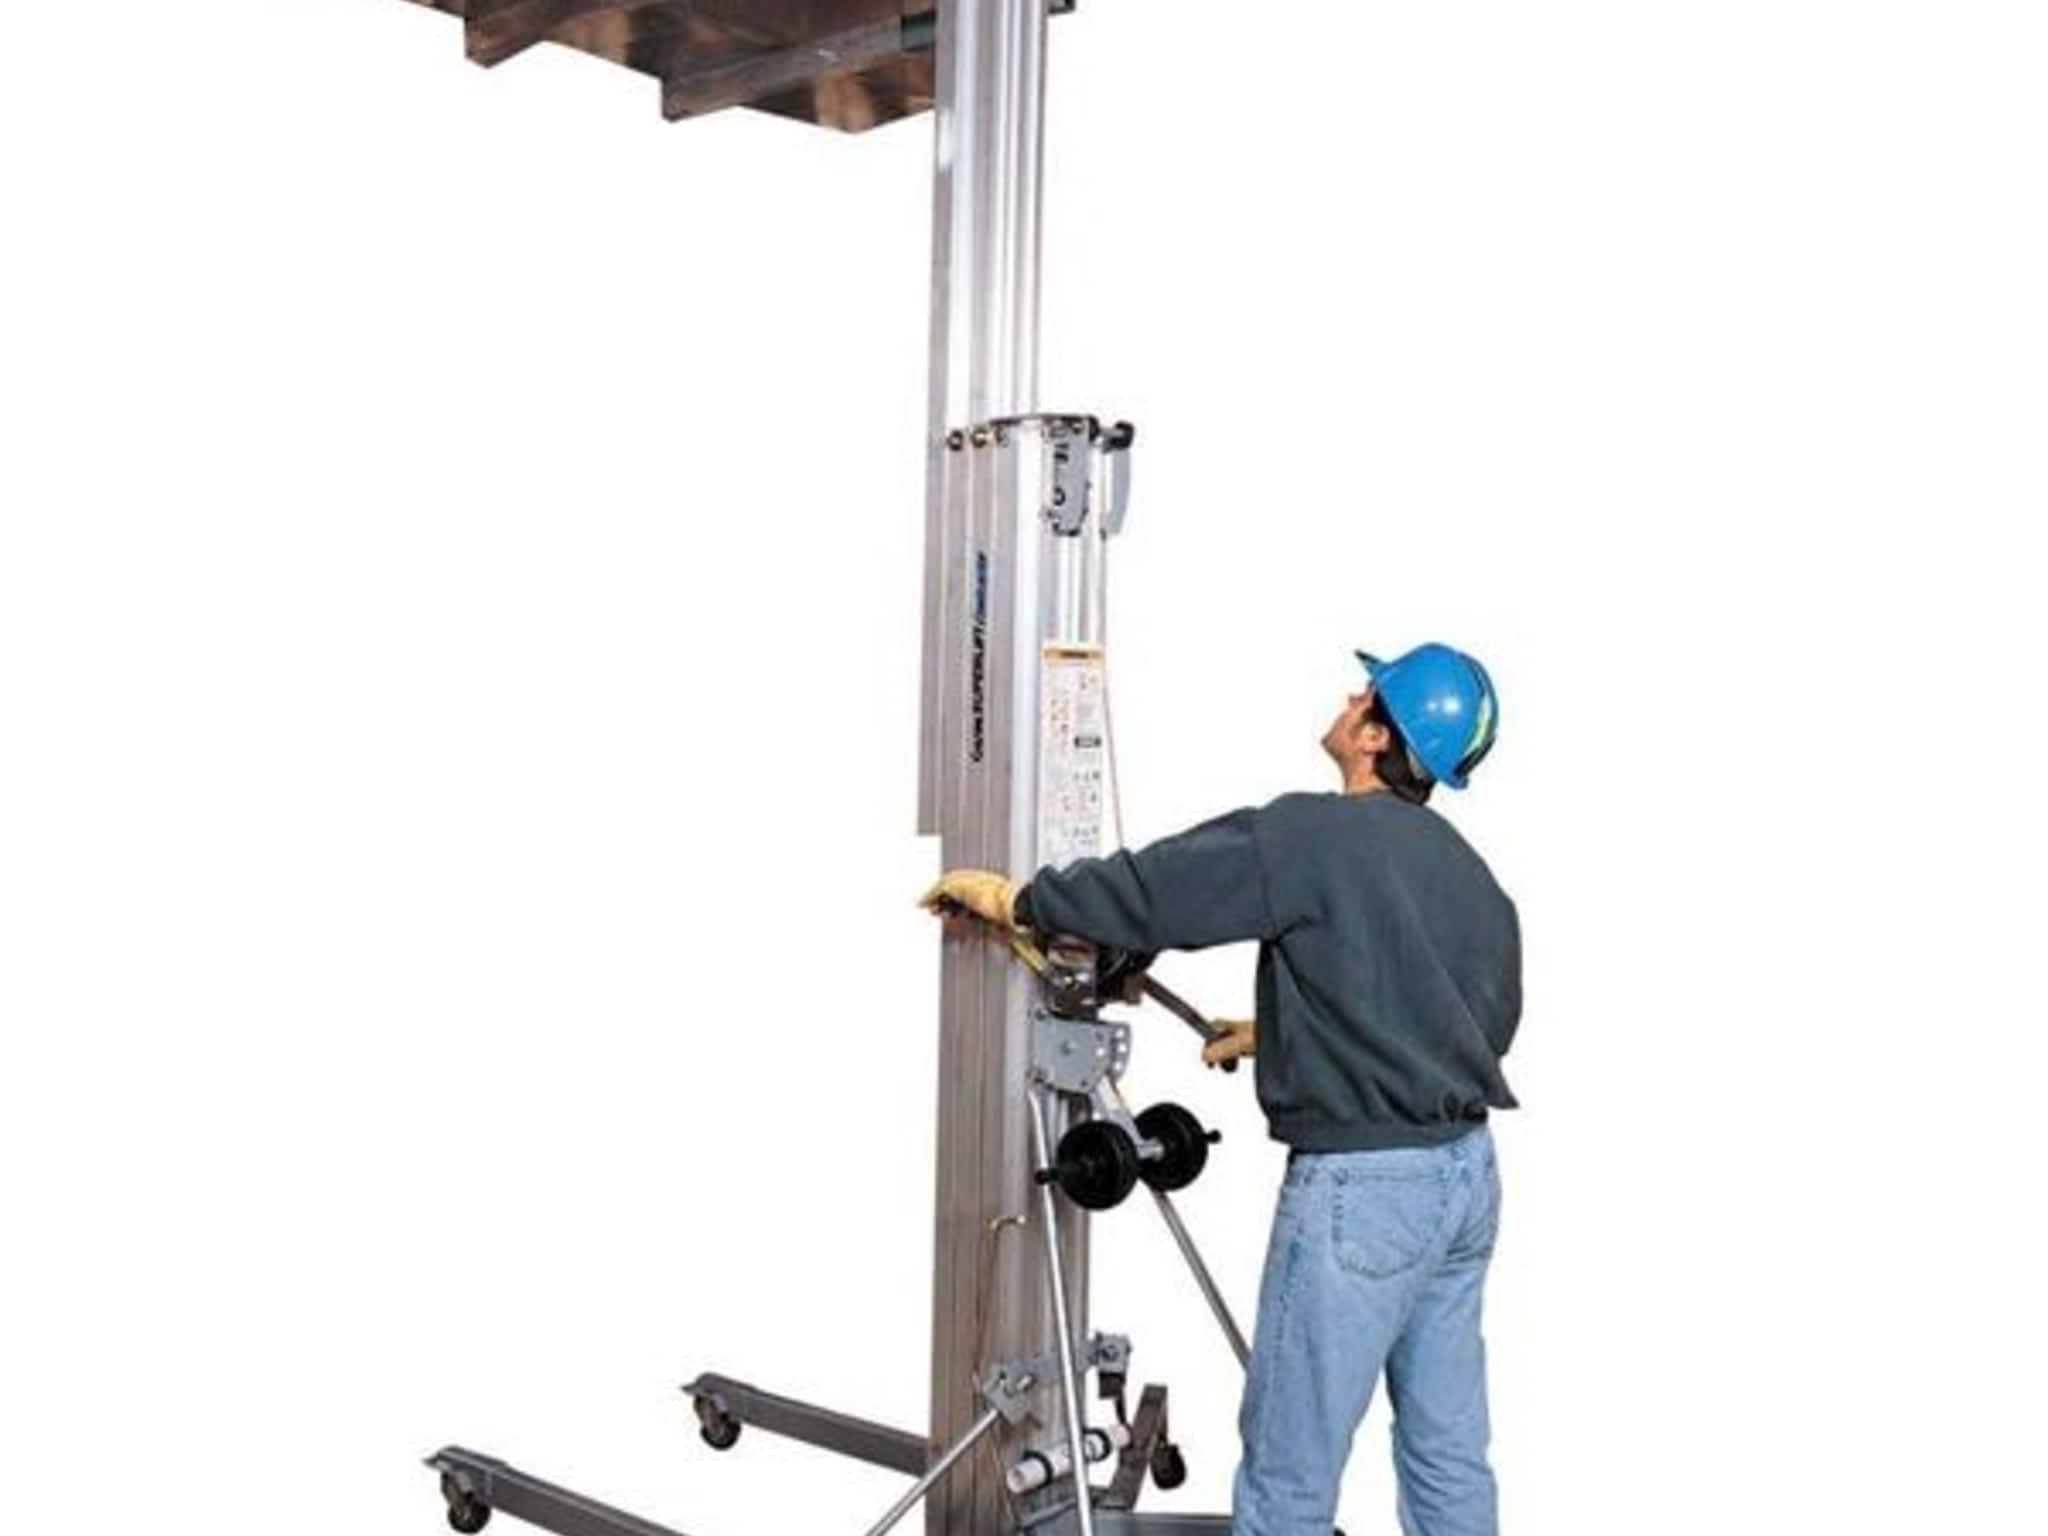 photo Lift Tech Equipment Service